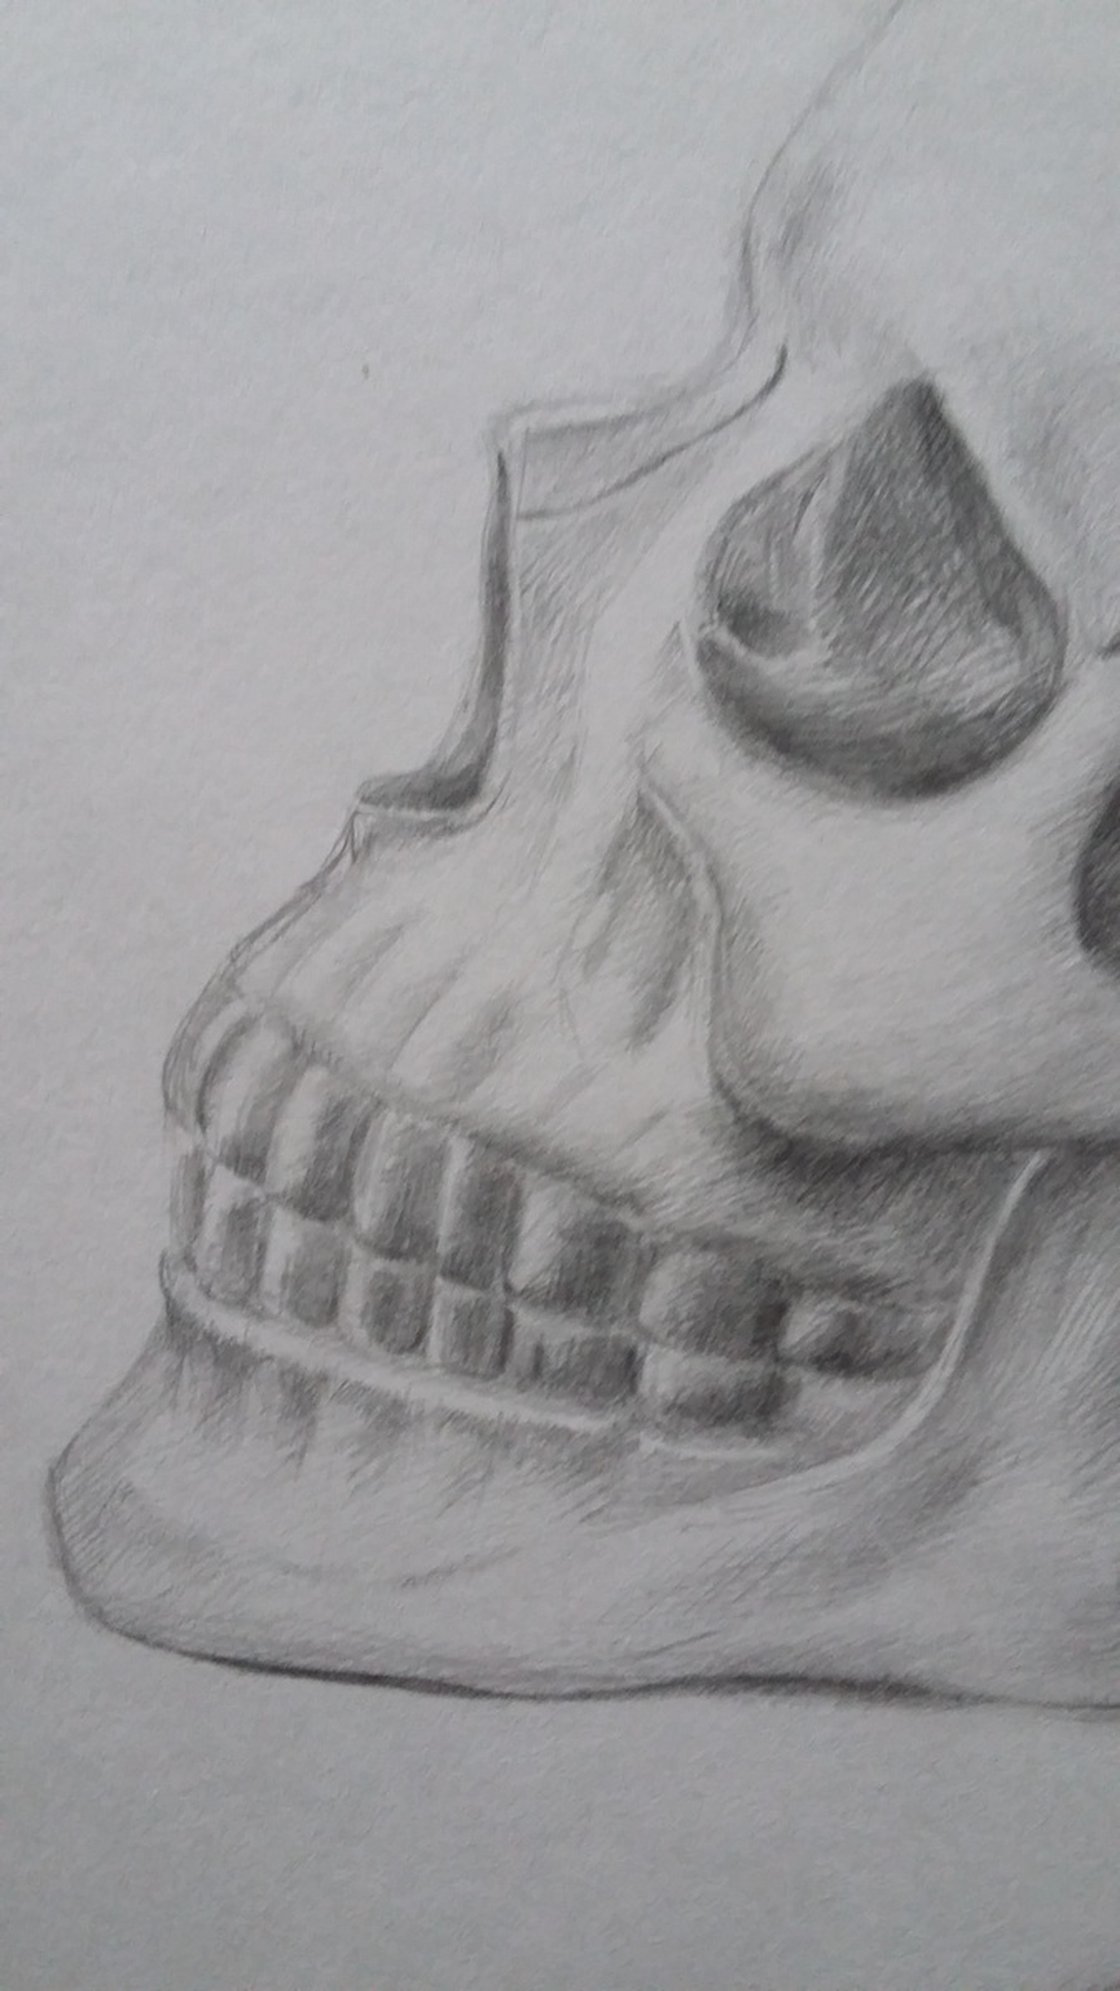 Skull 10x14 original pencil drawing